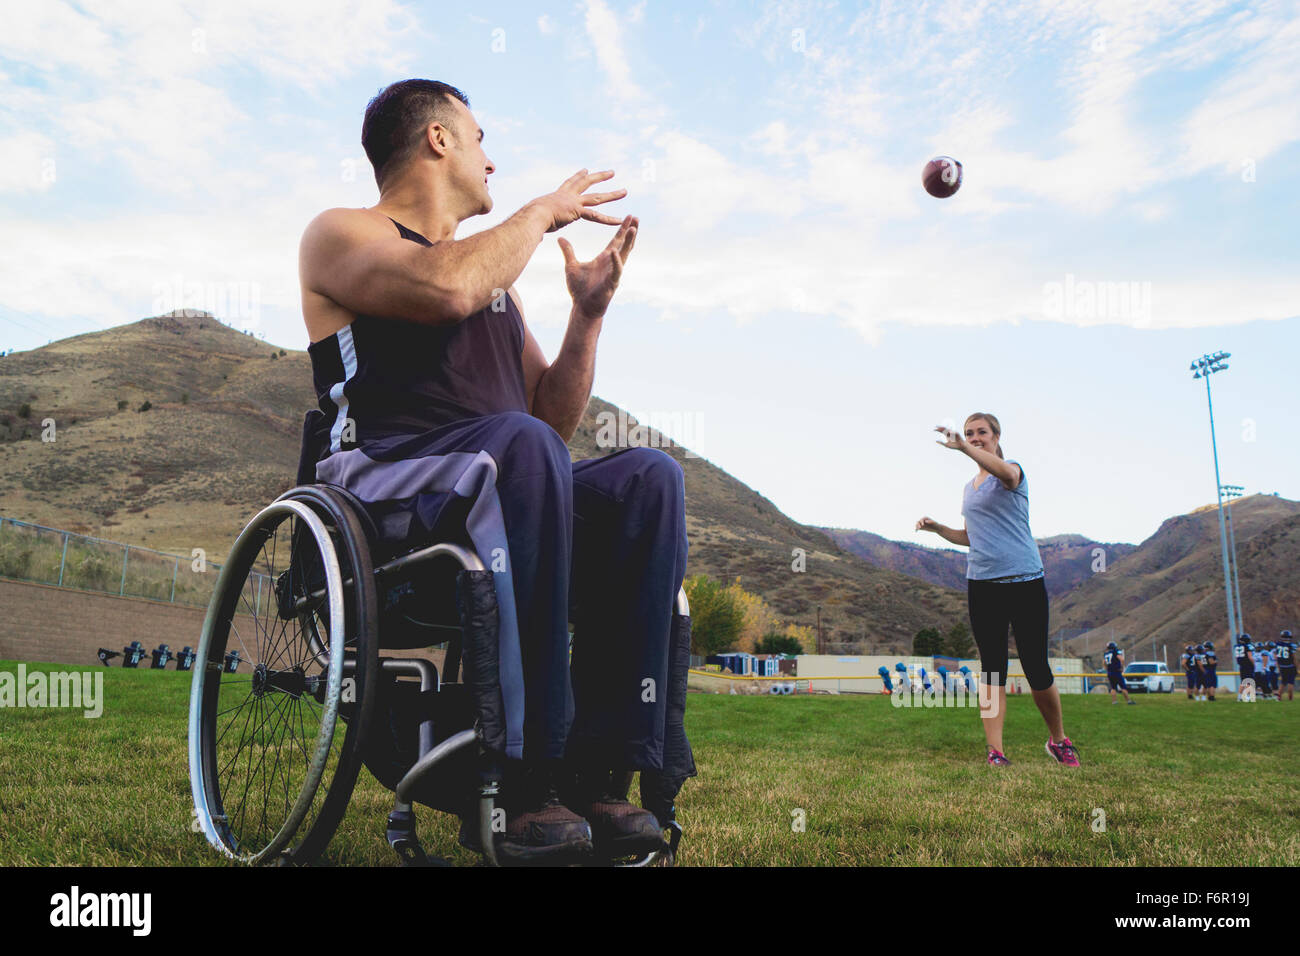 Paraplegic athlete in wheelchair with girlfriend tossing ball Stock Photo